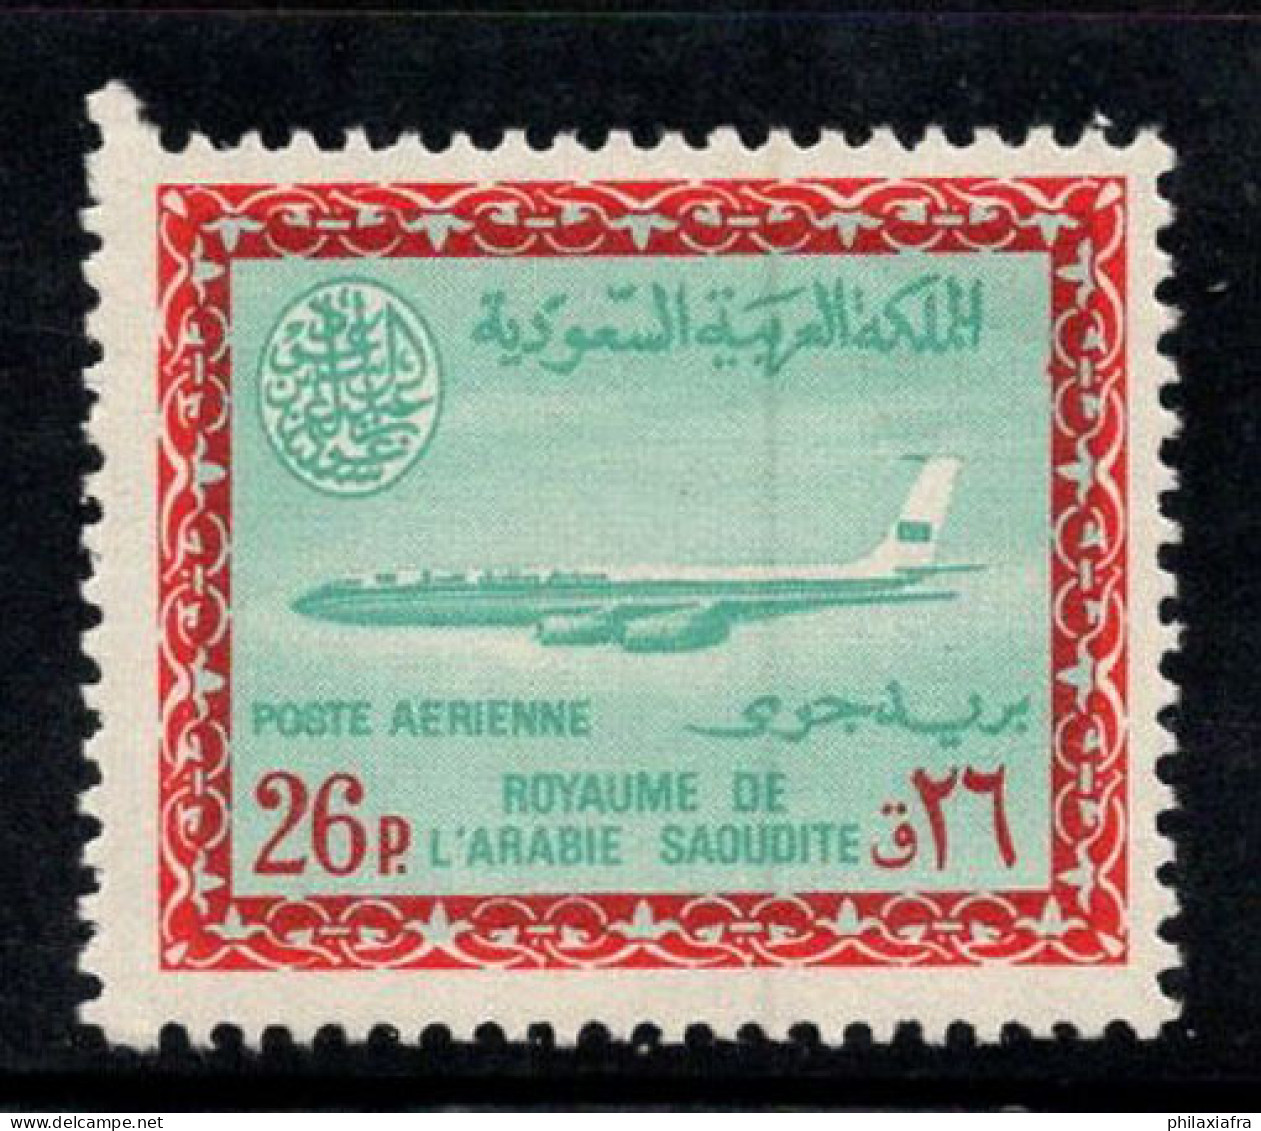 Arabie Saoudite 1965-72 Mi. 263 Neuf ** 100% Poste Aérienne 26 Pia, Boeing 720 B - Saoedi-Arabië